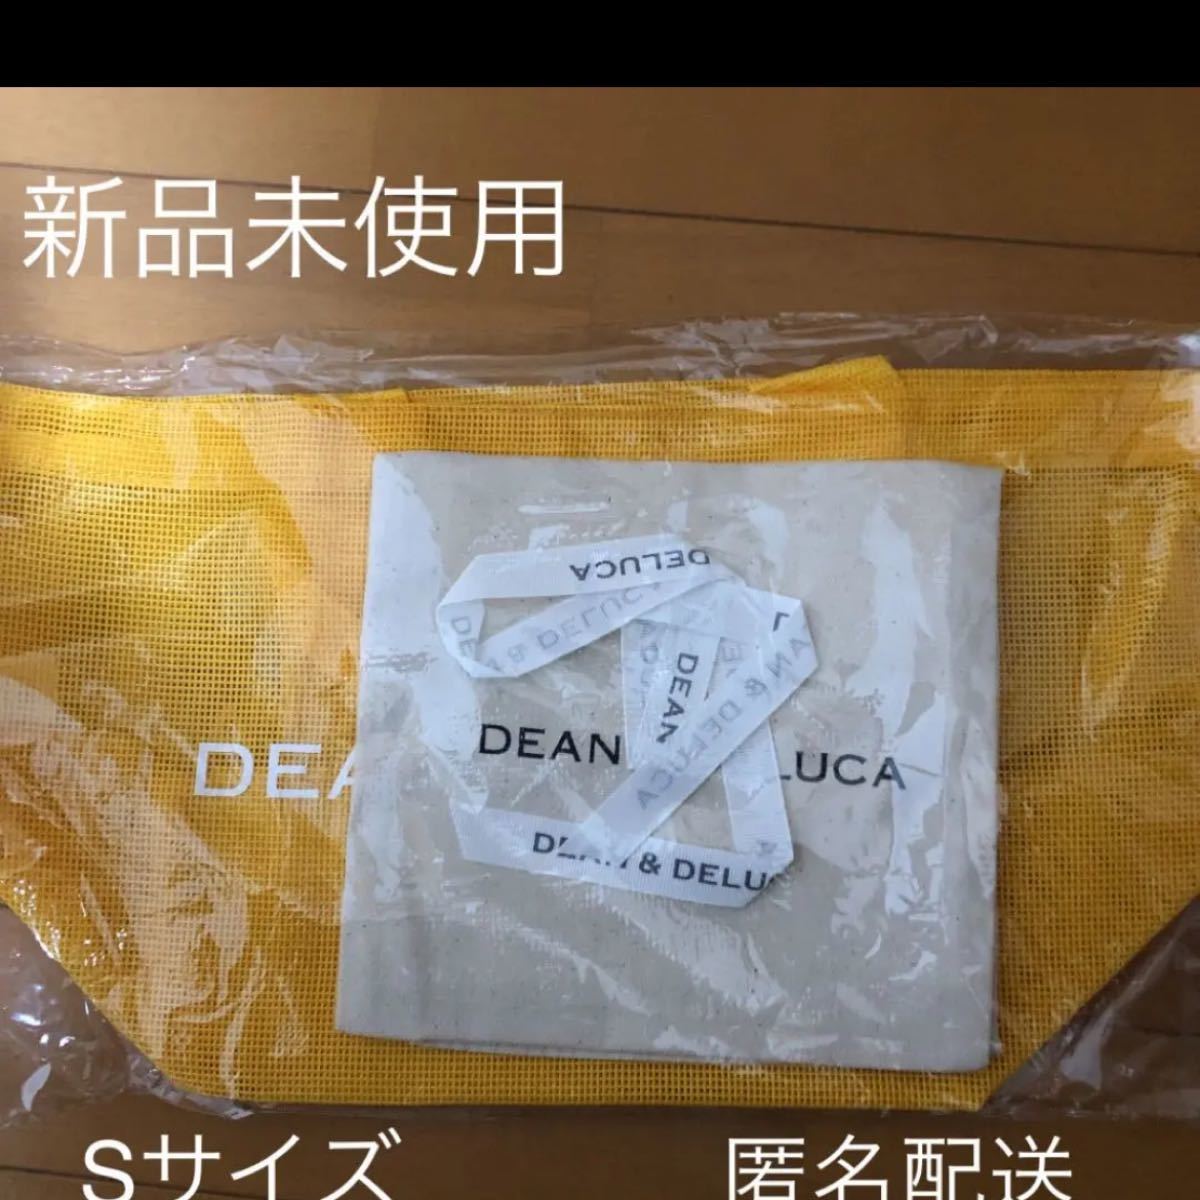 DEAN&DELUCA Sサイズメッシュトート人気のオレンジ 匿名配送 トートバッグ